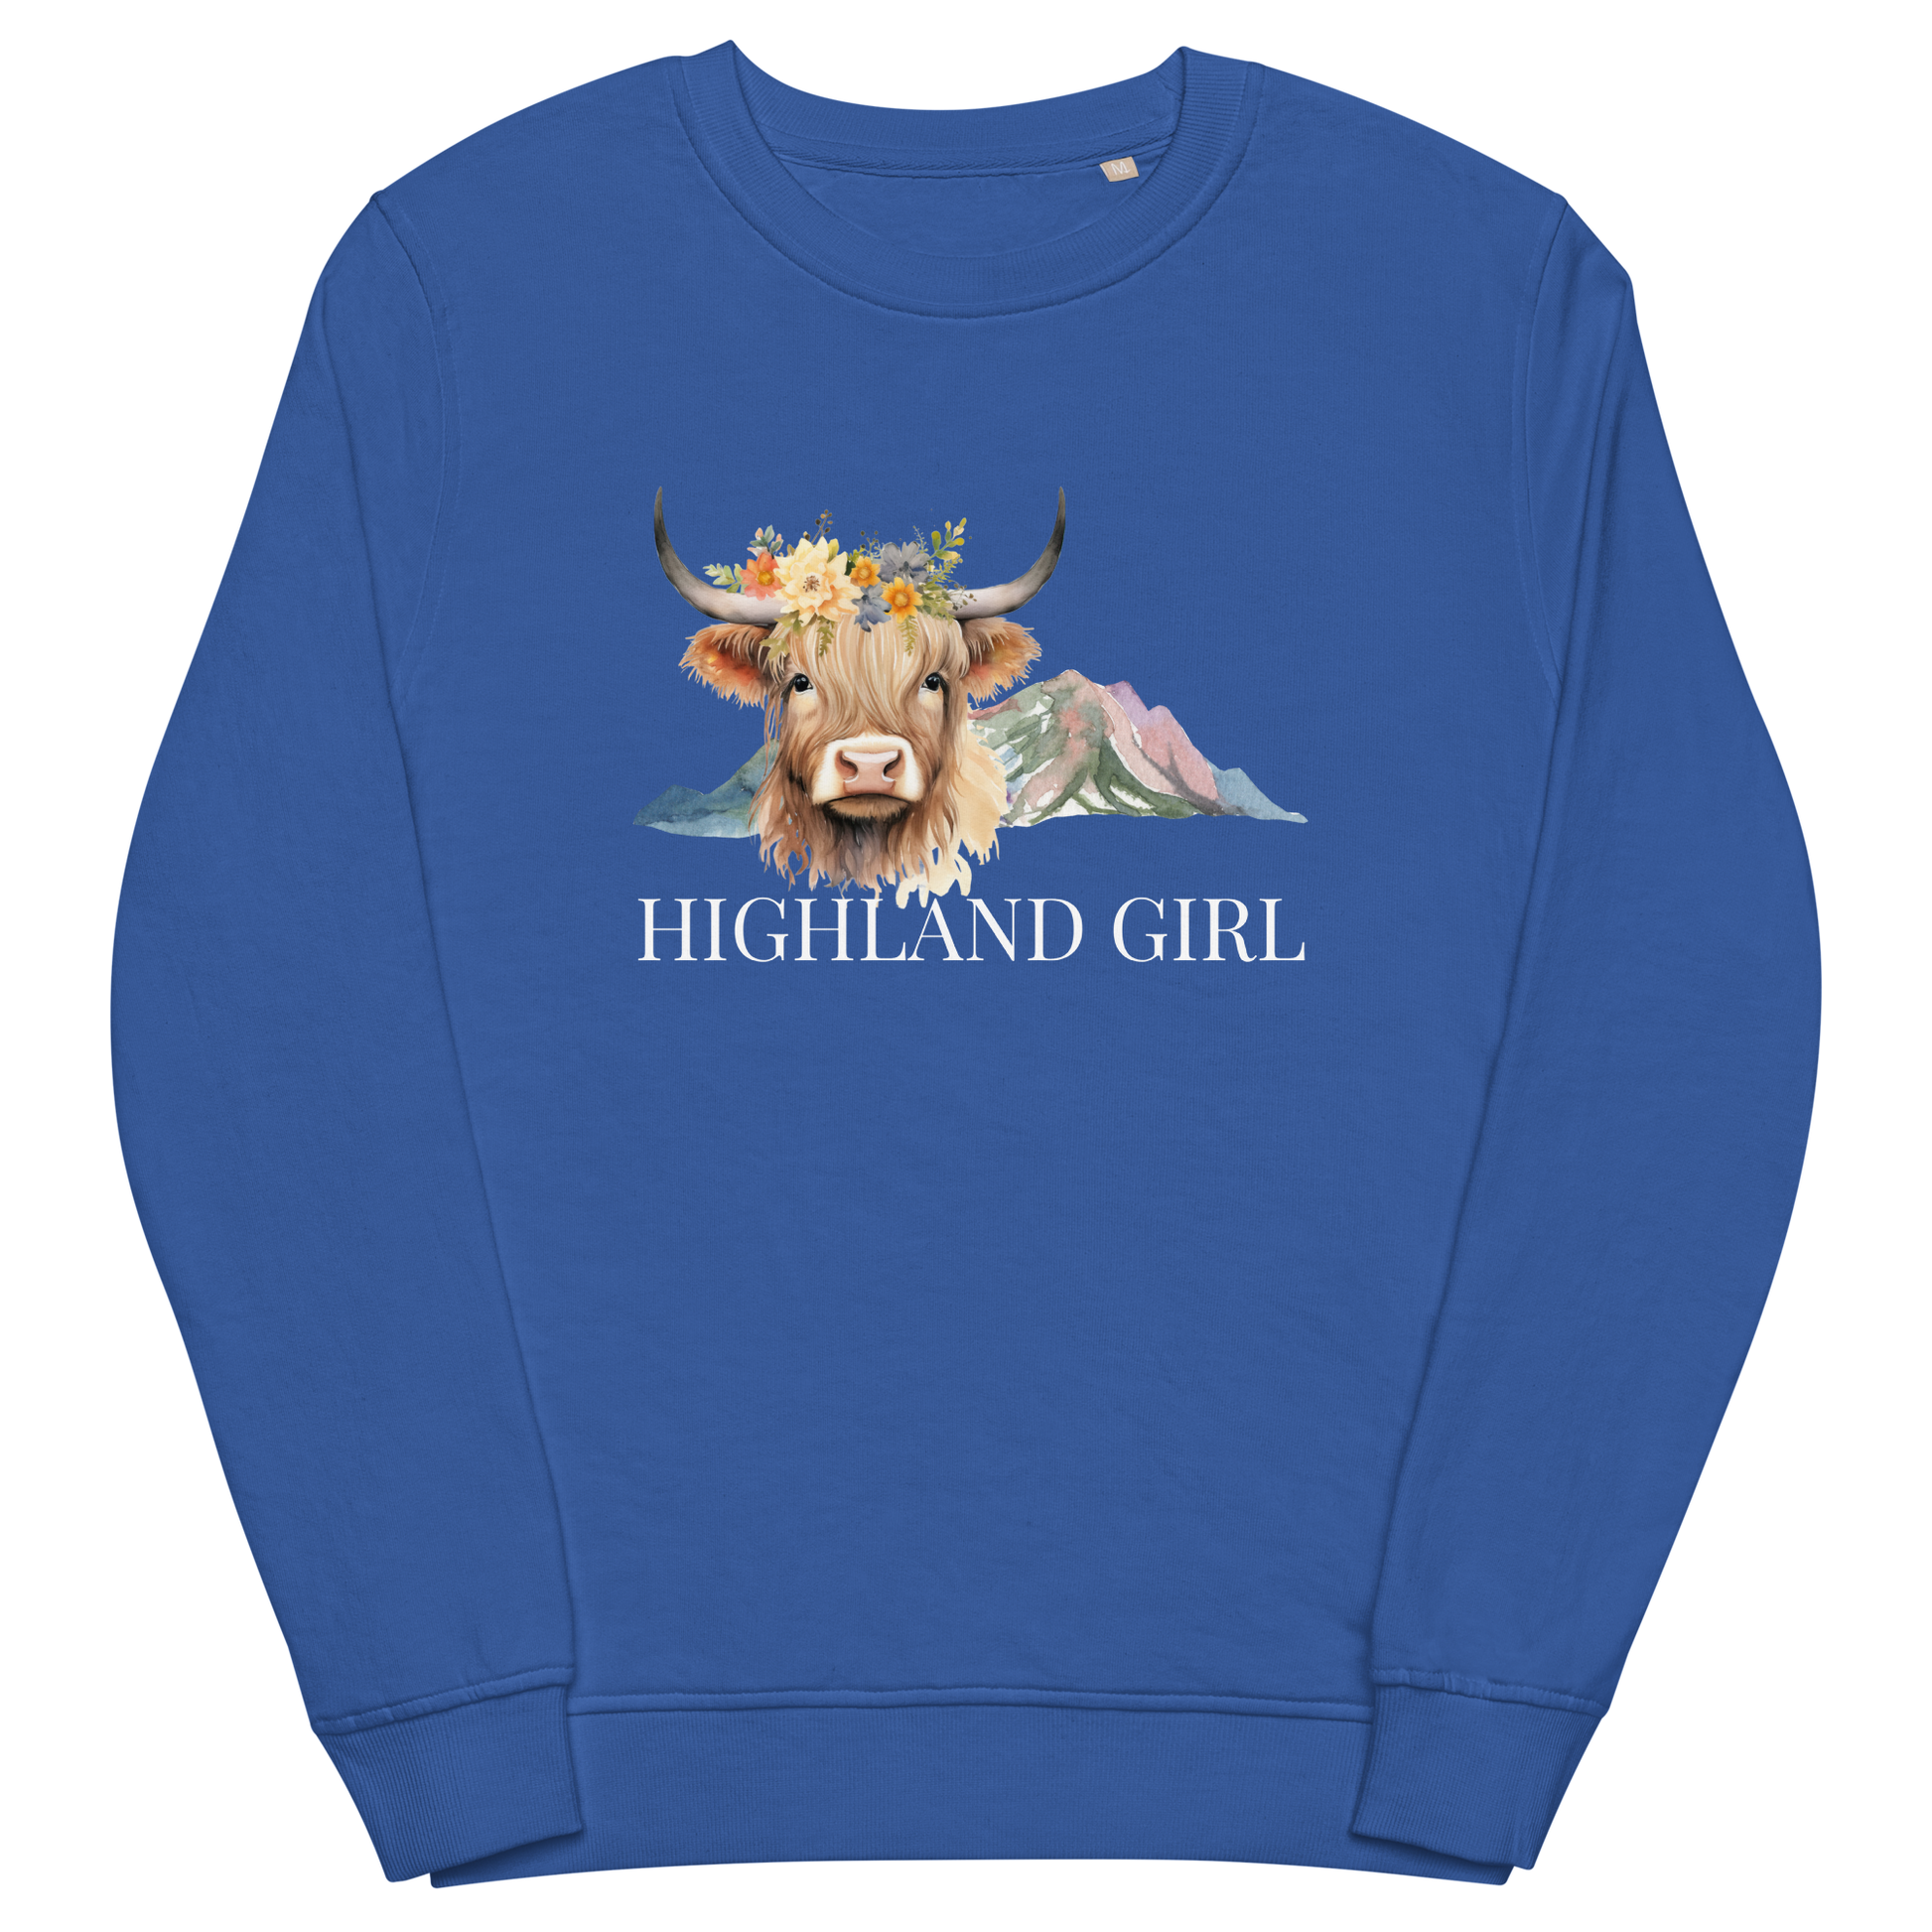 Royal Blue Organic Cotton Highland Cow Sweatshirt showcasing an adorable Highland Girl graphic on the chest - Cute Graphic Highland Cow Sweatshirts - Boozy Fox